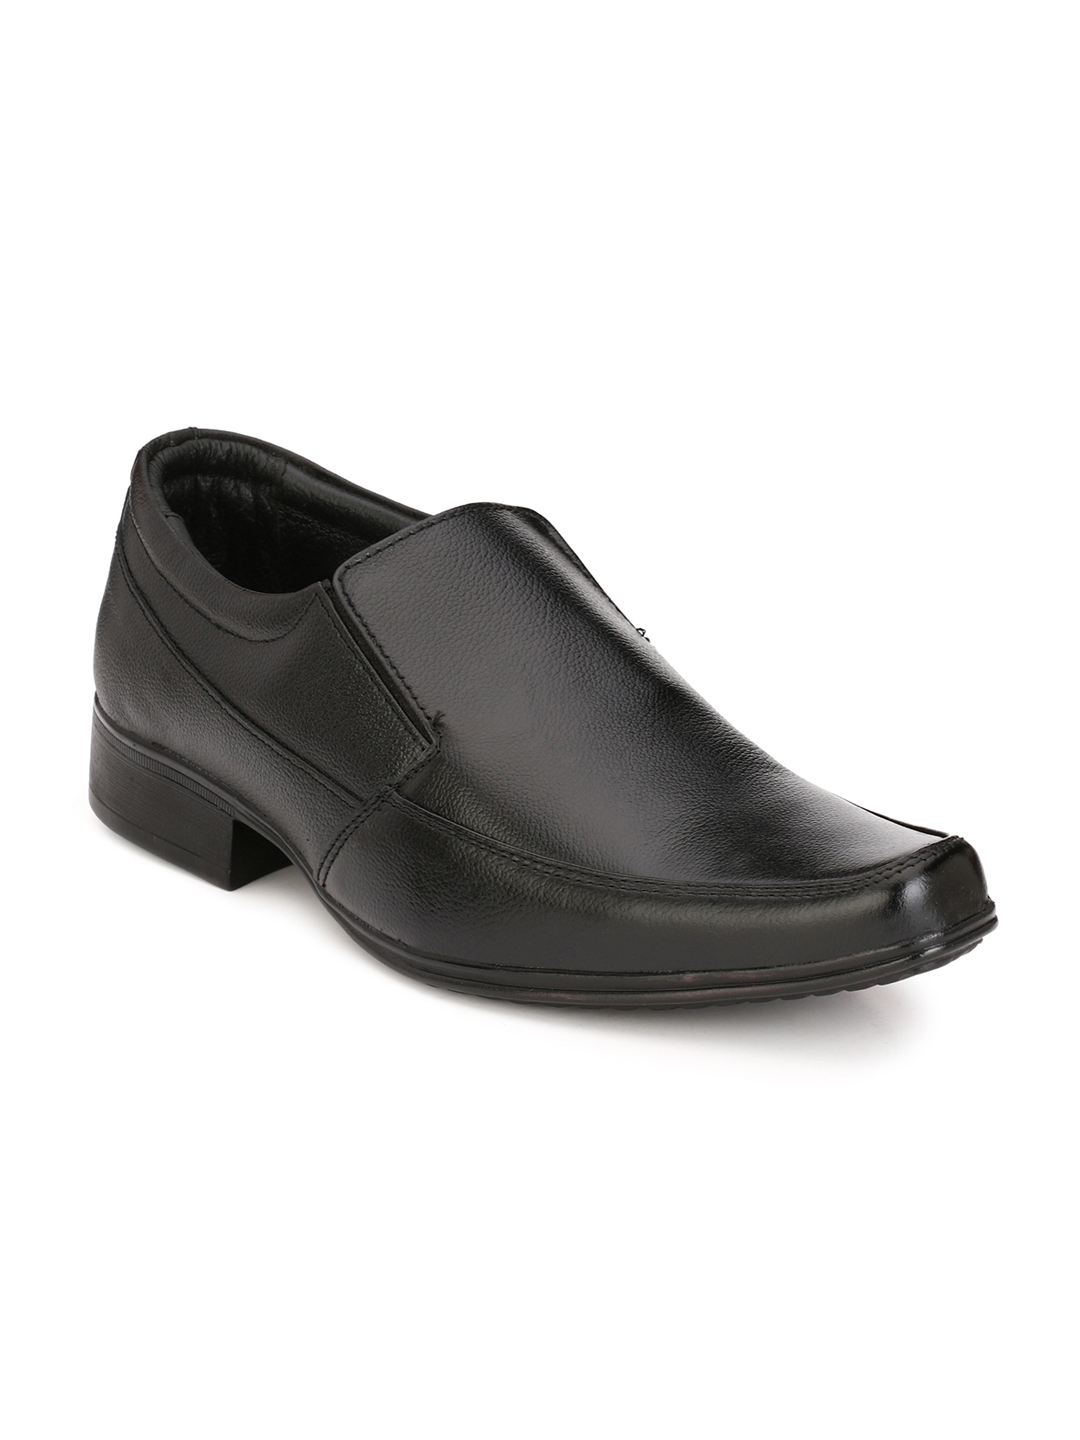 Buy Eego Italy Men Formal Black Leather Slip On Shoes - Formal Shoes ...